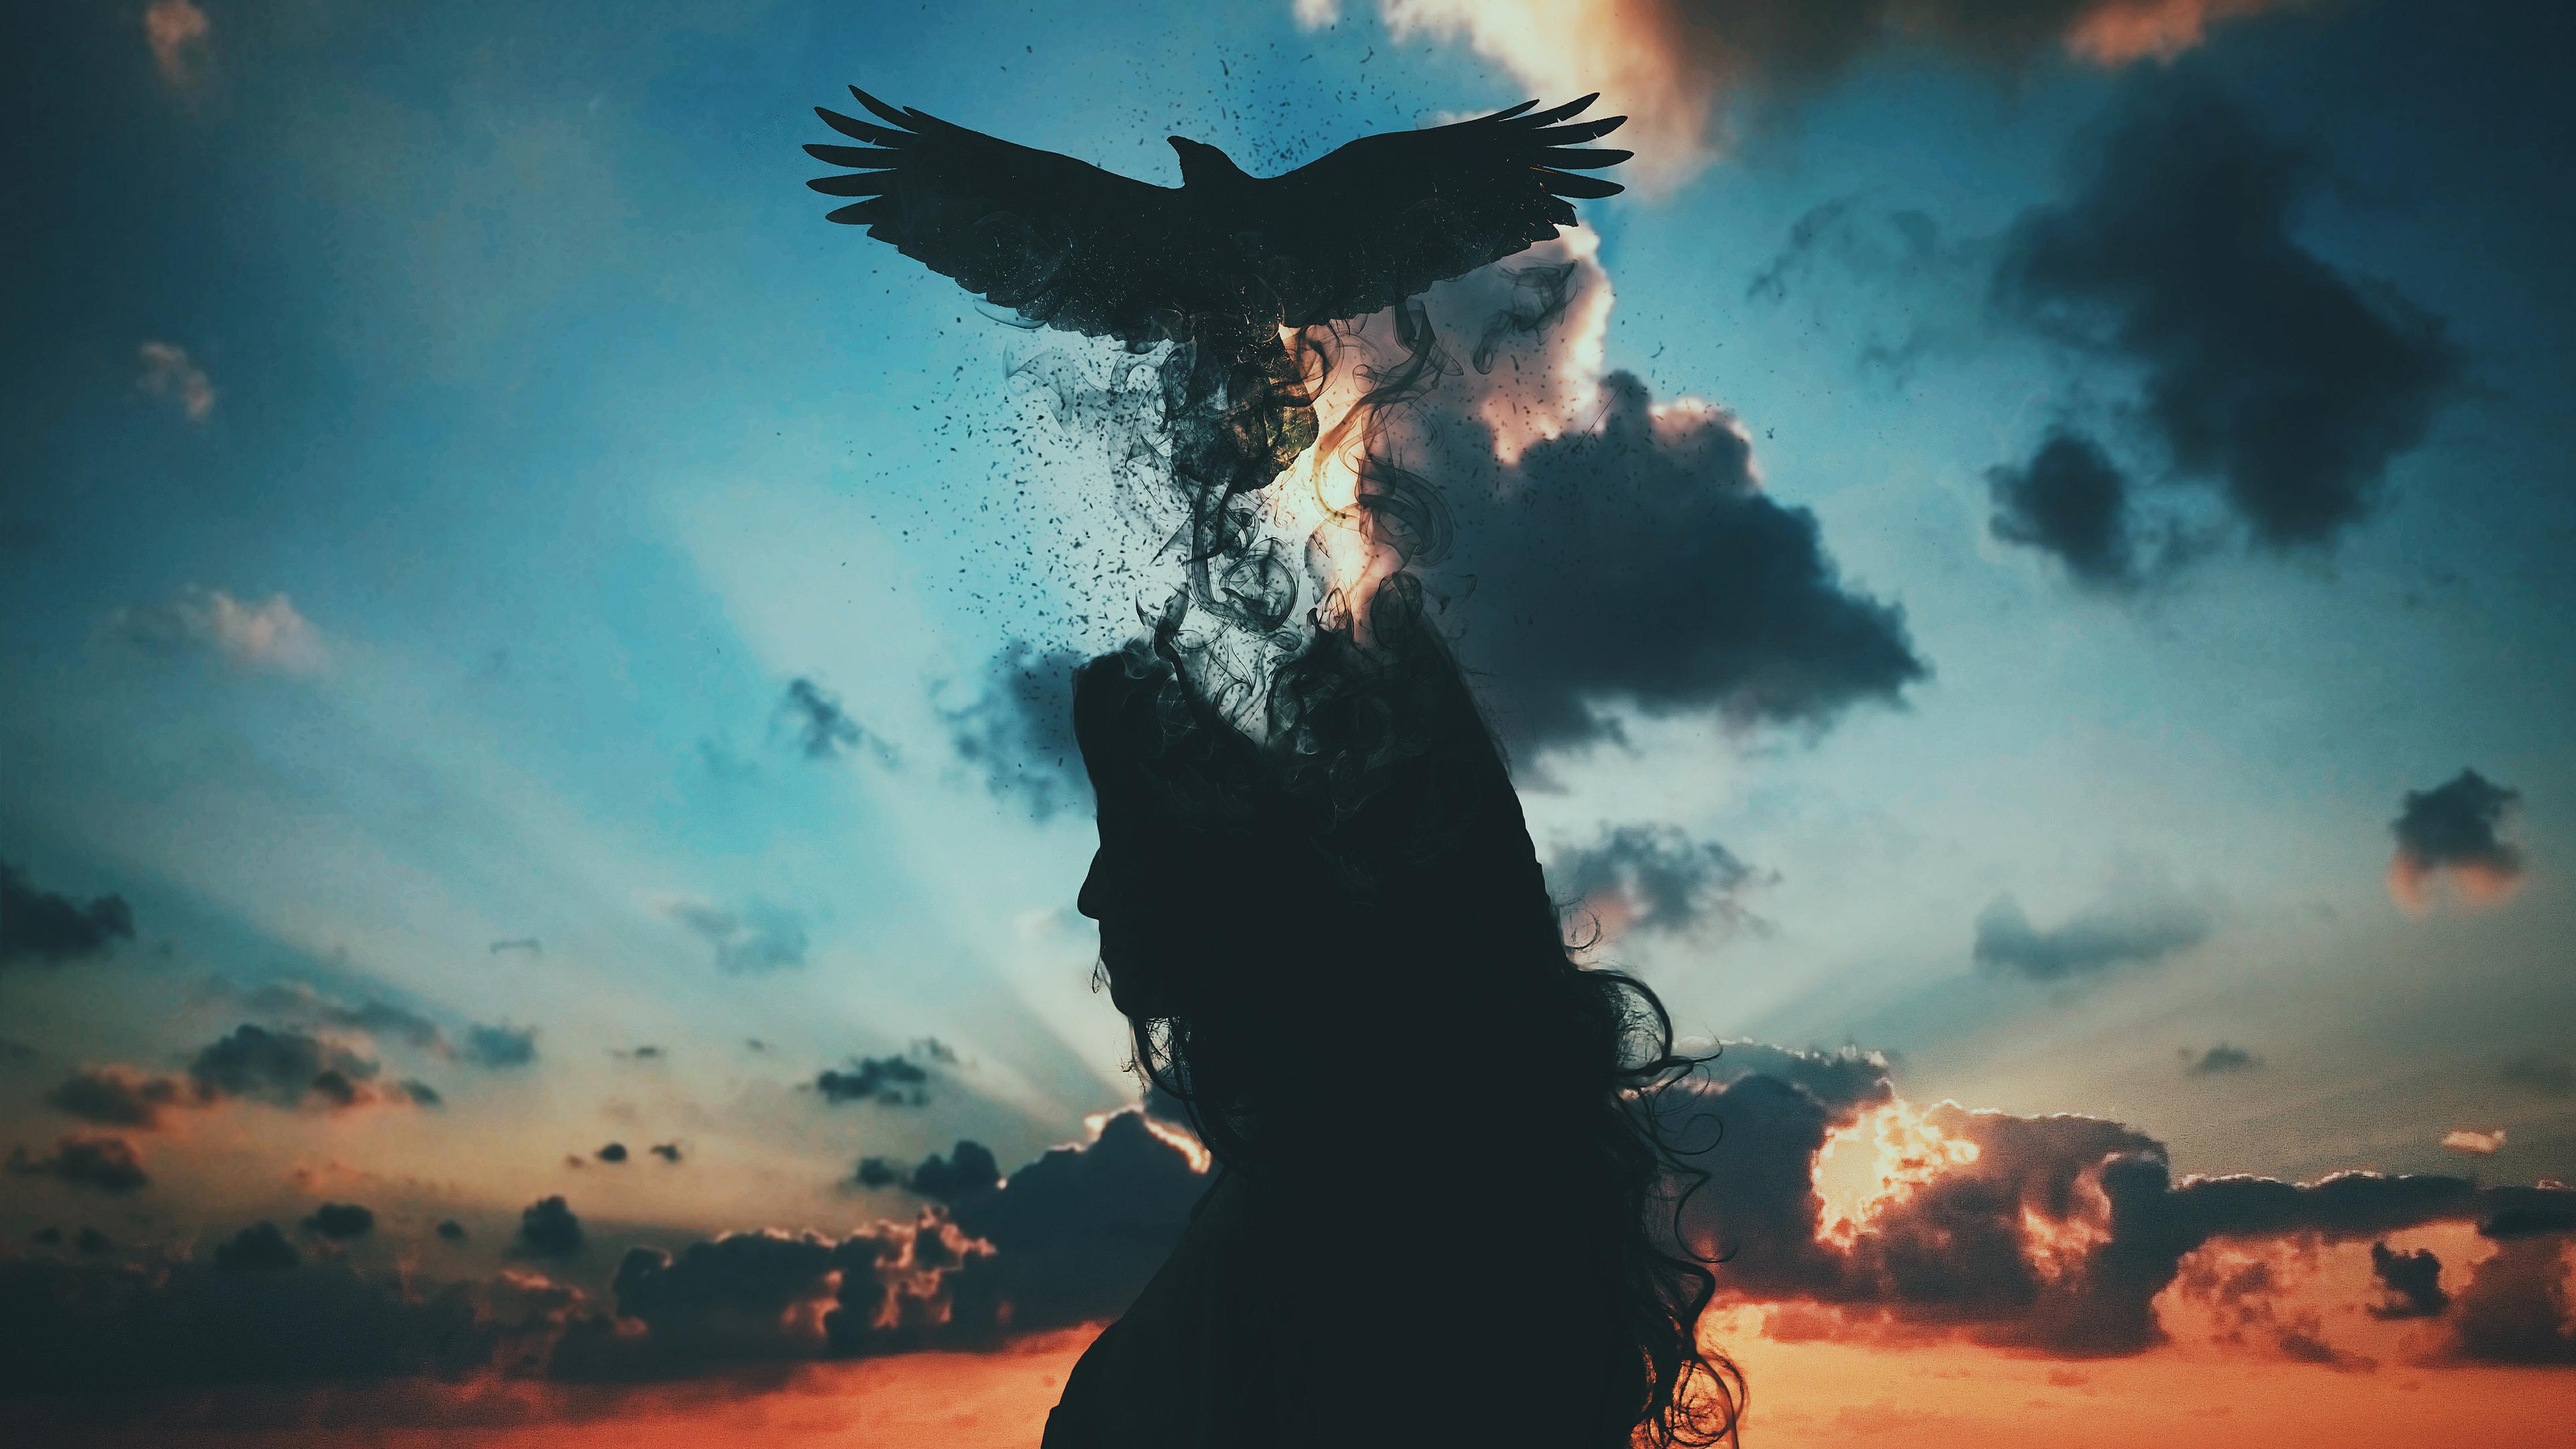 Downaload Surreal, fantasy, dream, bird and woman, sunset wallpaper